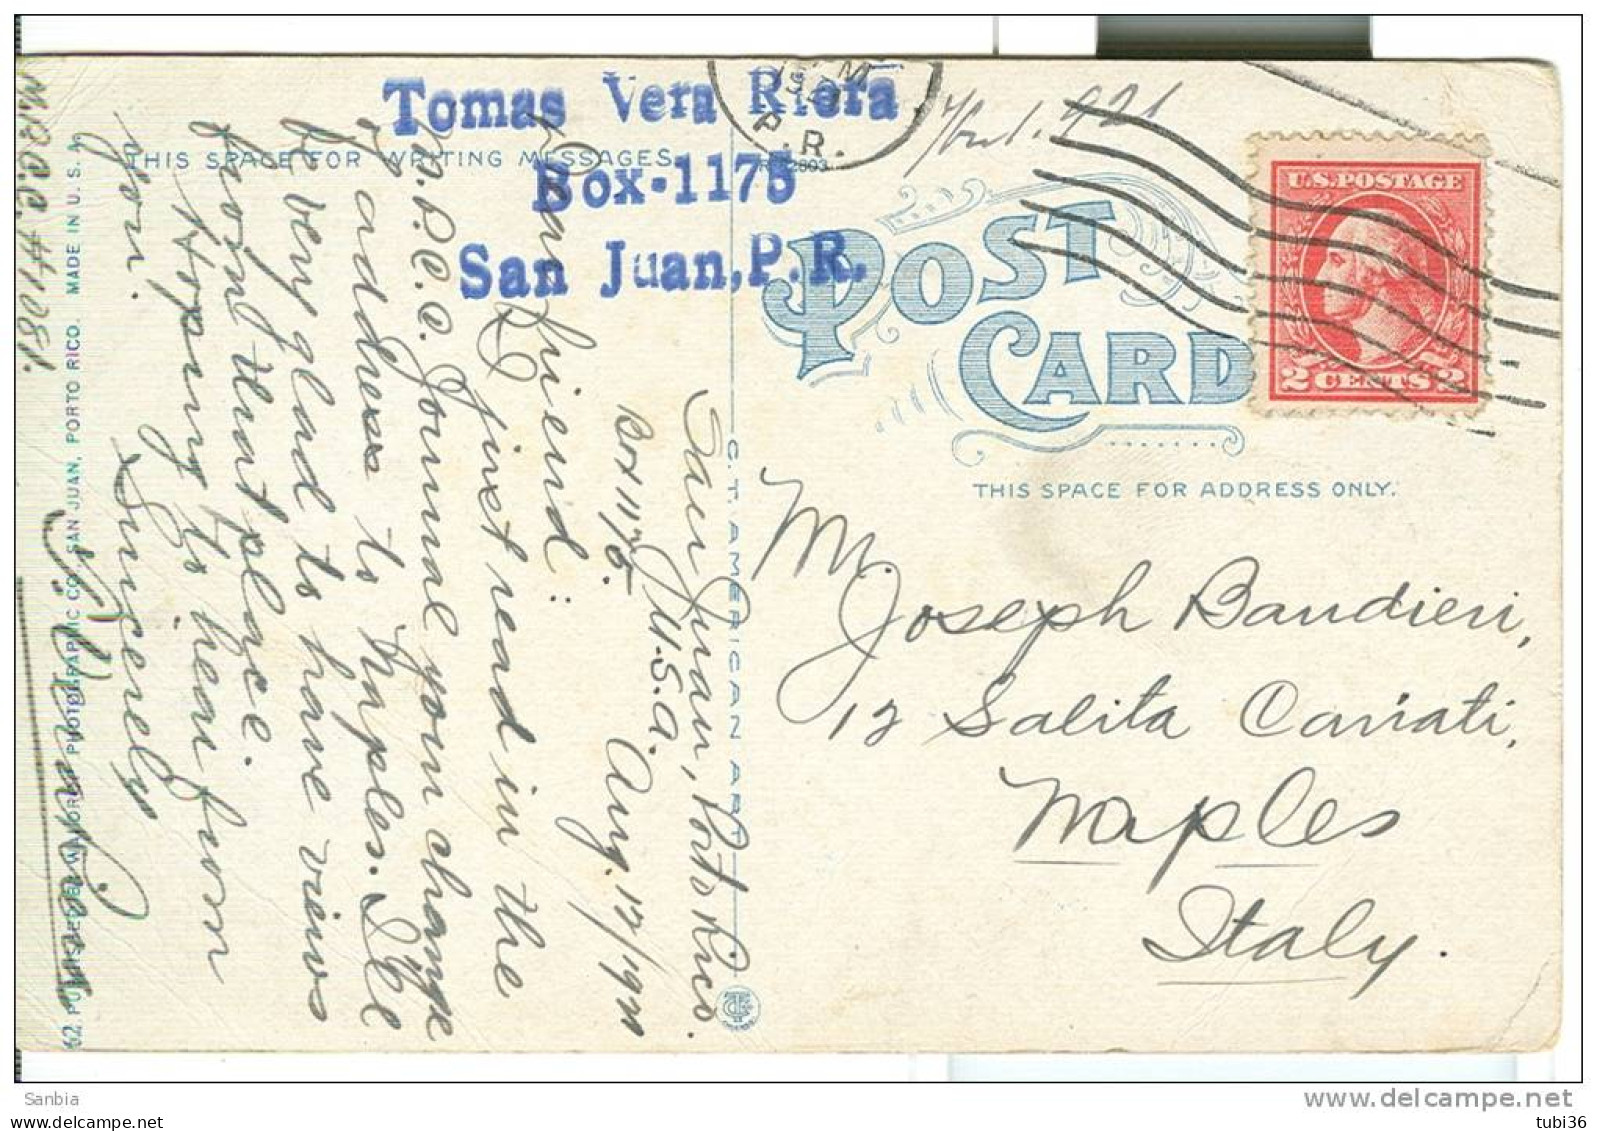 PORTO RICO-SAN JUAN- CARD ILLUSTRATED, COLOR, USED, 1921, SMALL SIZE 9 X 14 - Puerto Rico